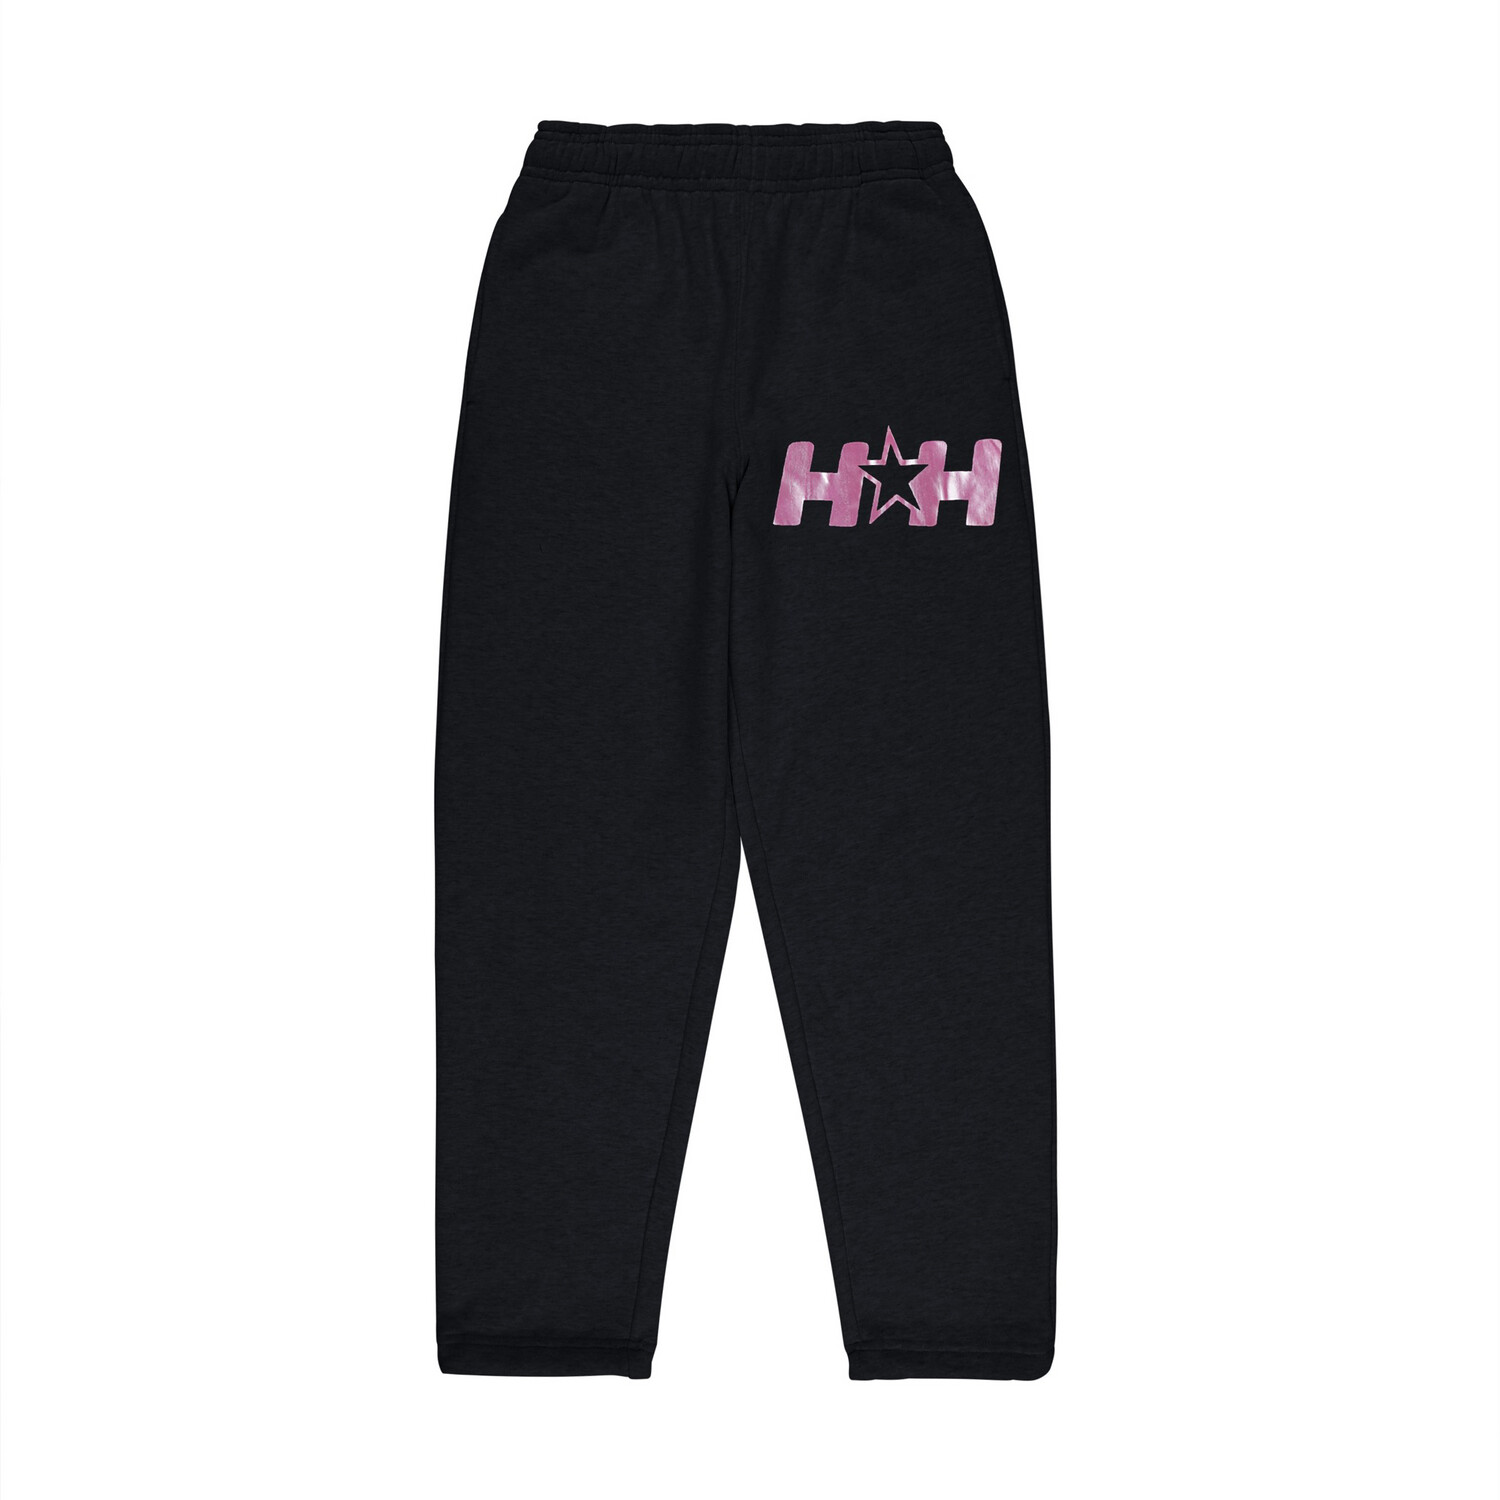 HH Star Sweatpants (Black/Metallic Pink)